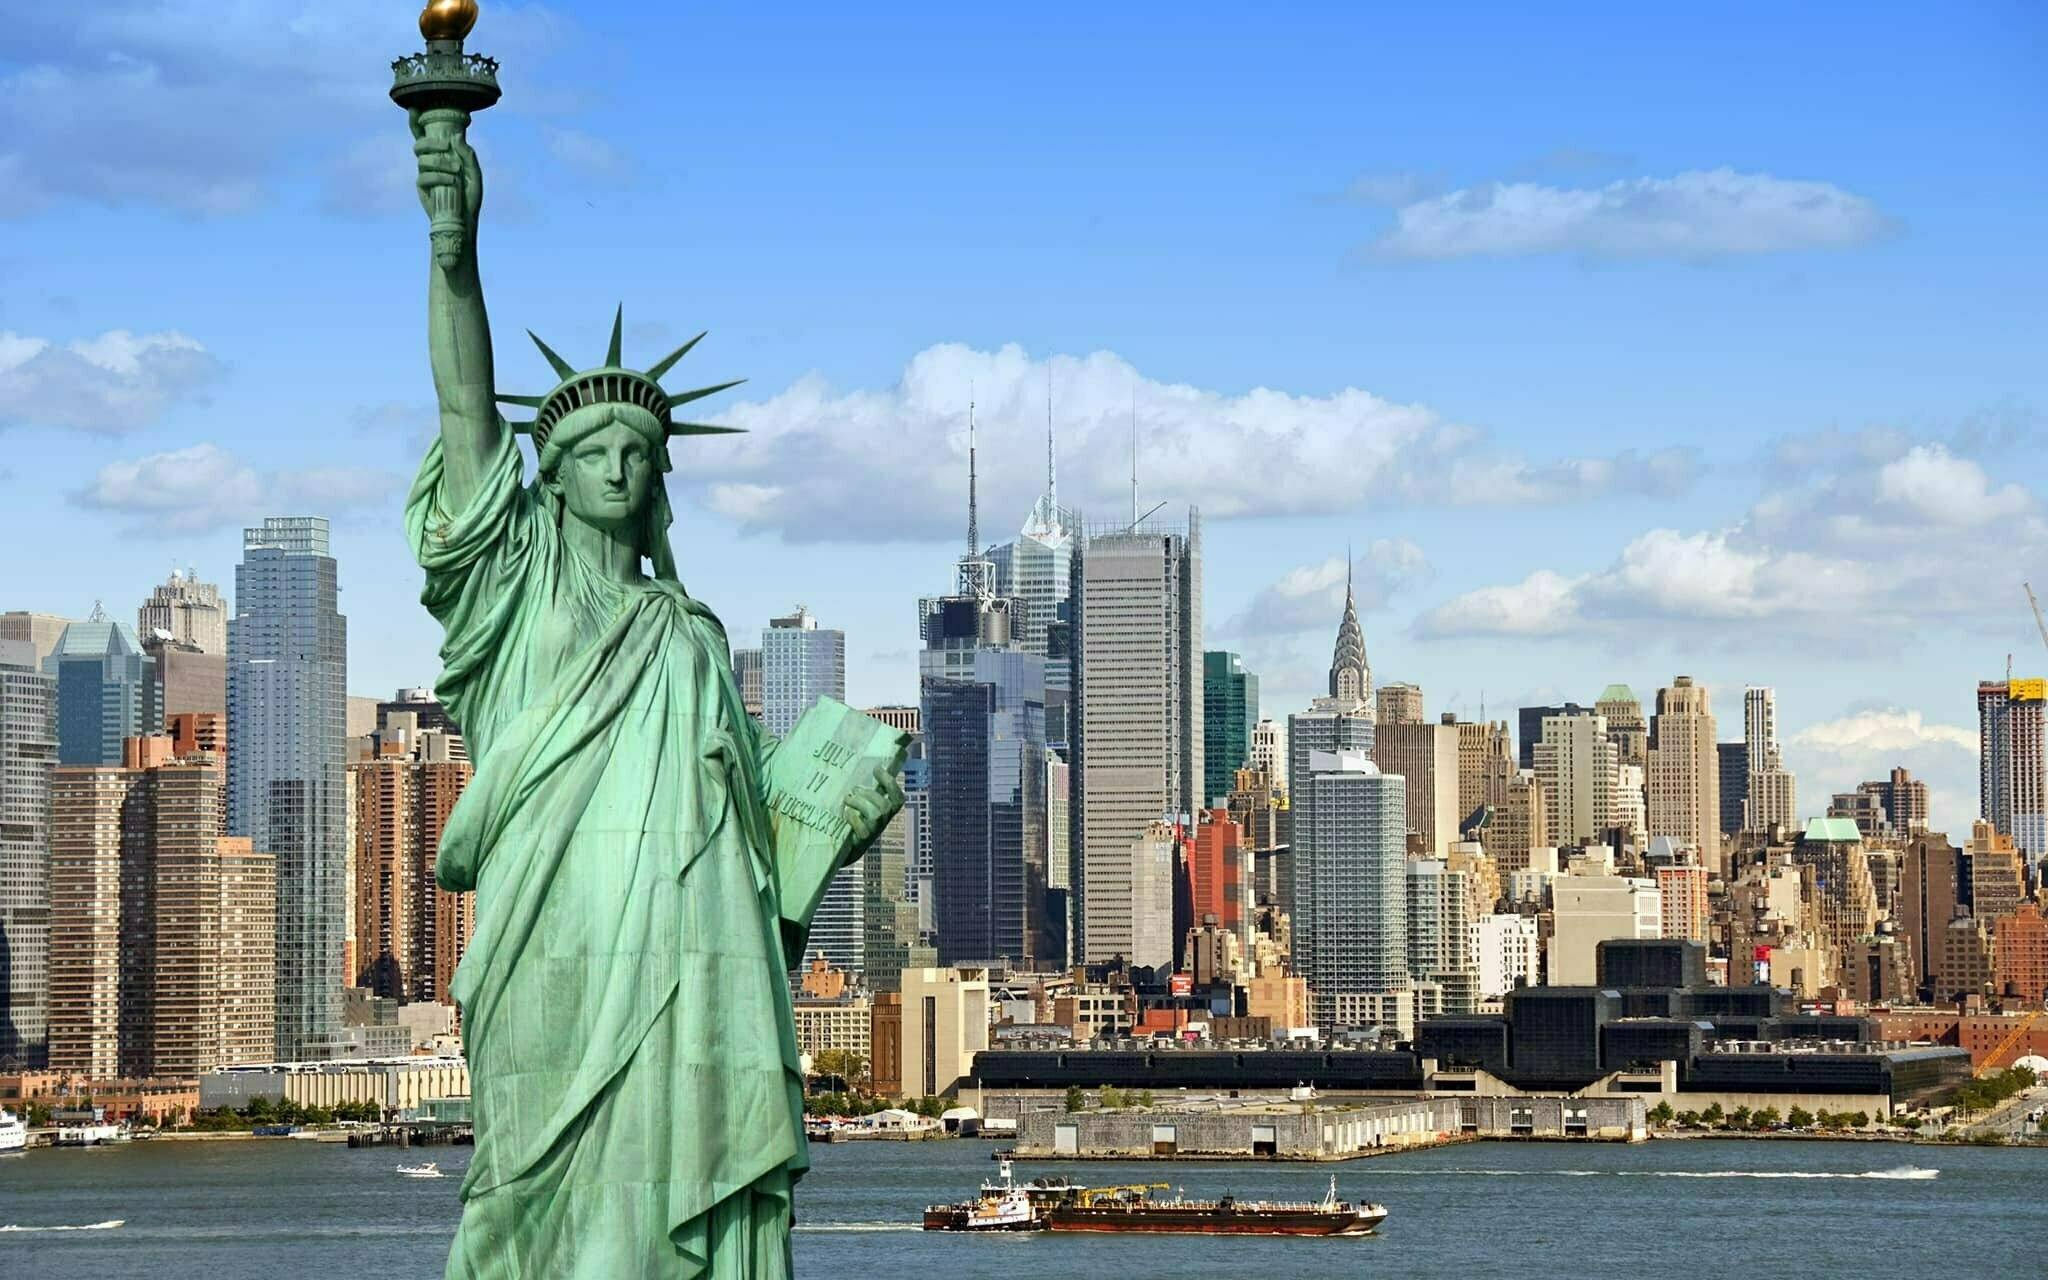 America is beautiful. Статуя свободы США. Манхэттен статуя свободы. Нью Йорк статуя. Статуя свободы (г. Нью-Йорк).